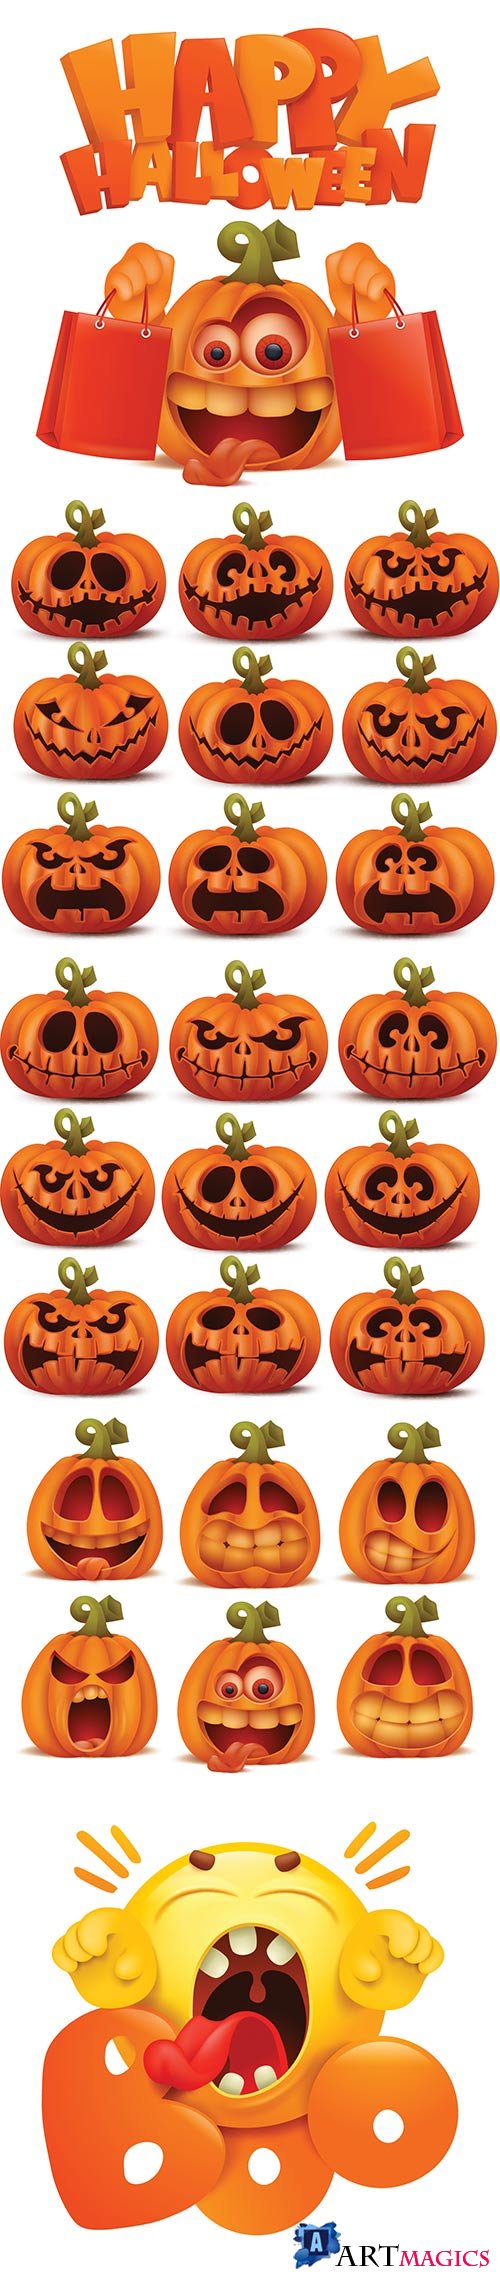 Halloween illustration set in vector